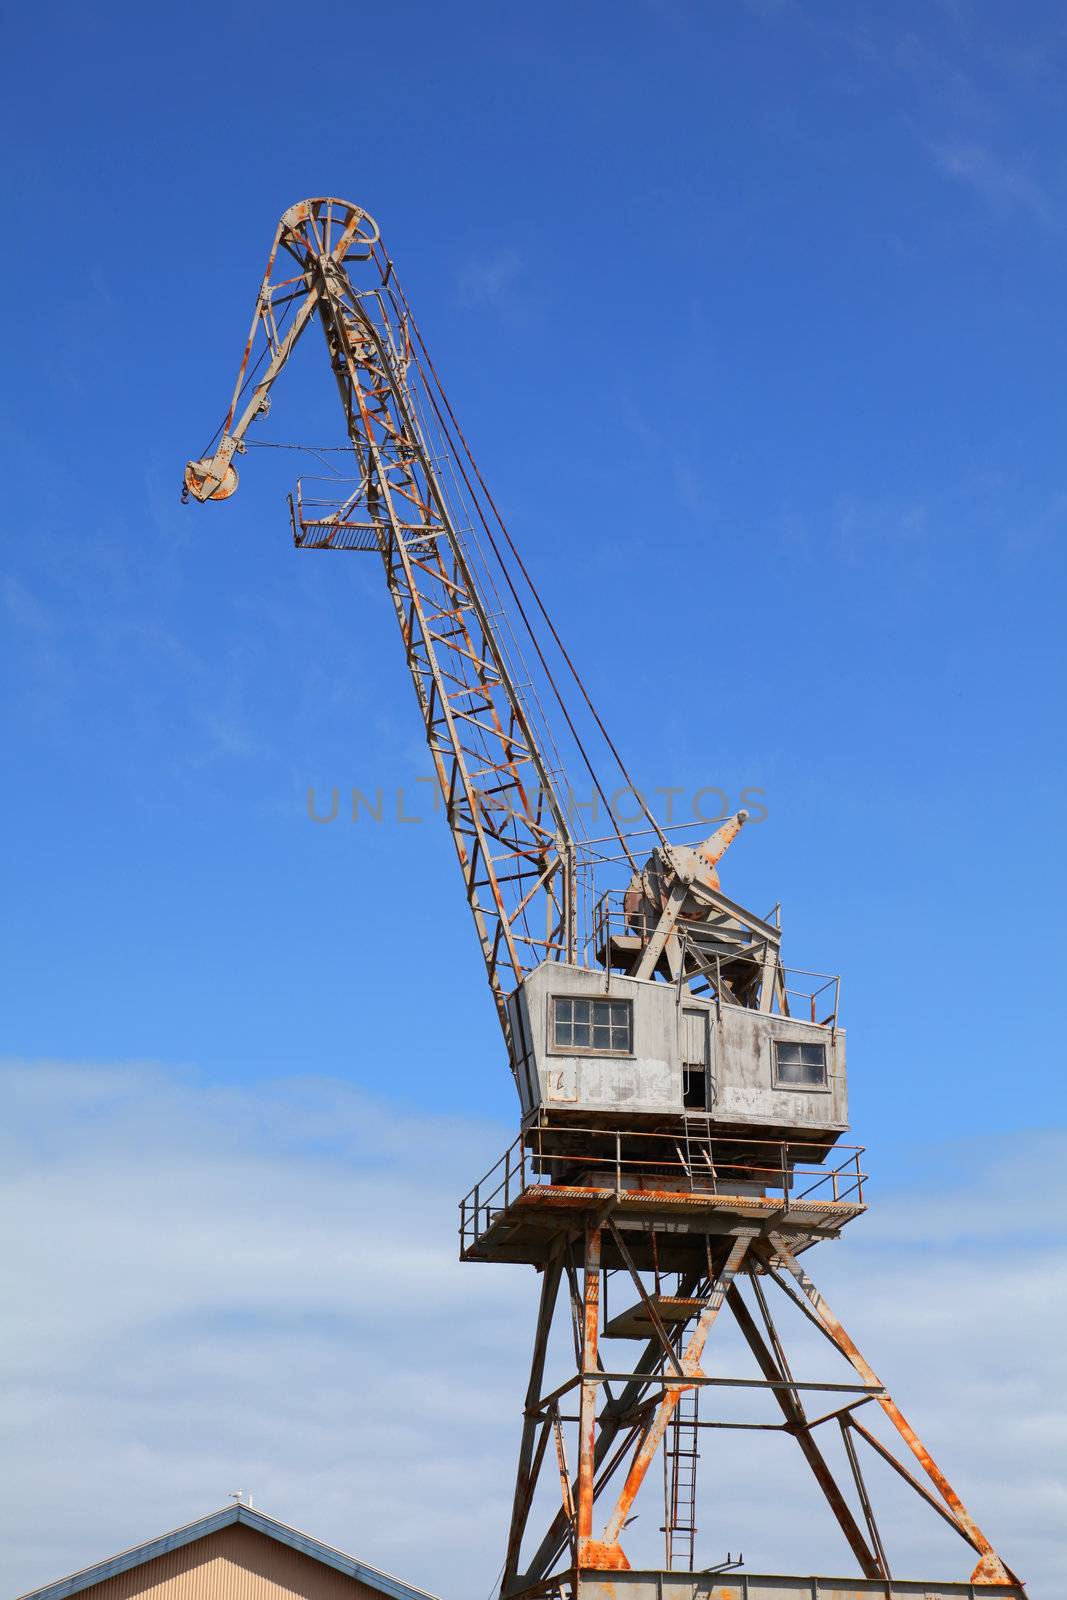 Retired Steel Construction Crane in a Shipyard